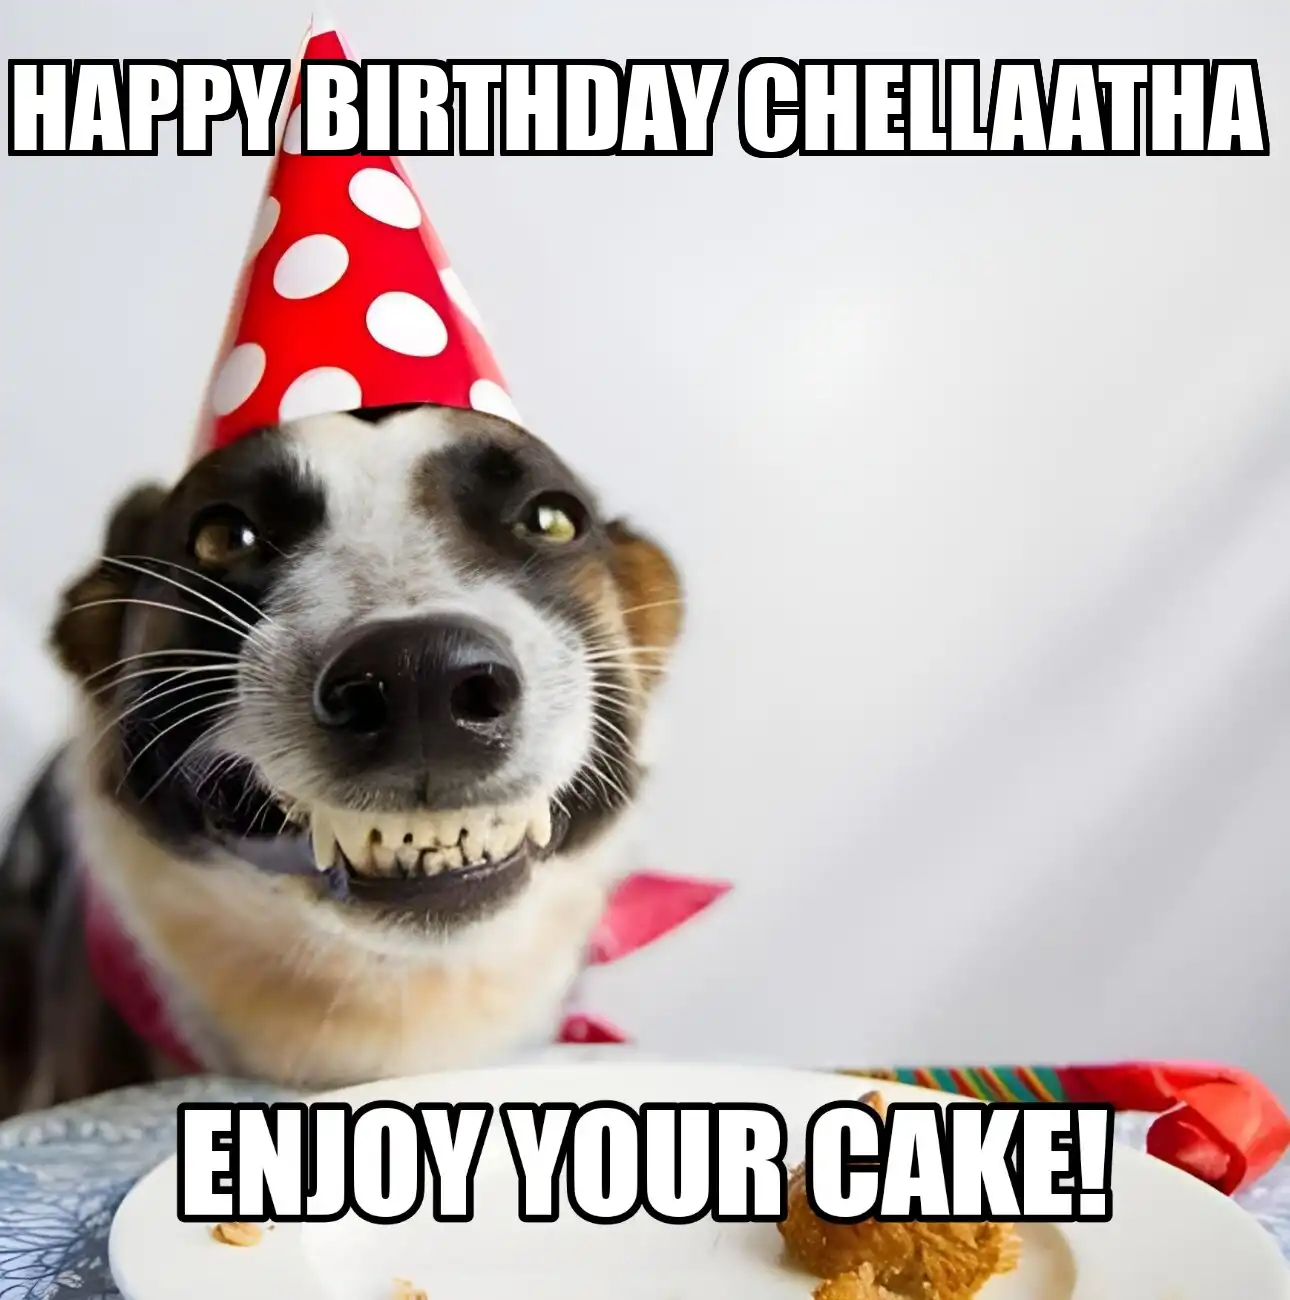 Happy Birthday Chellaatha Enjoy Your Cake Dog Meme